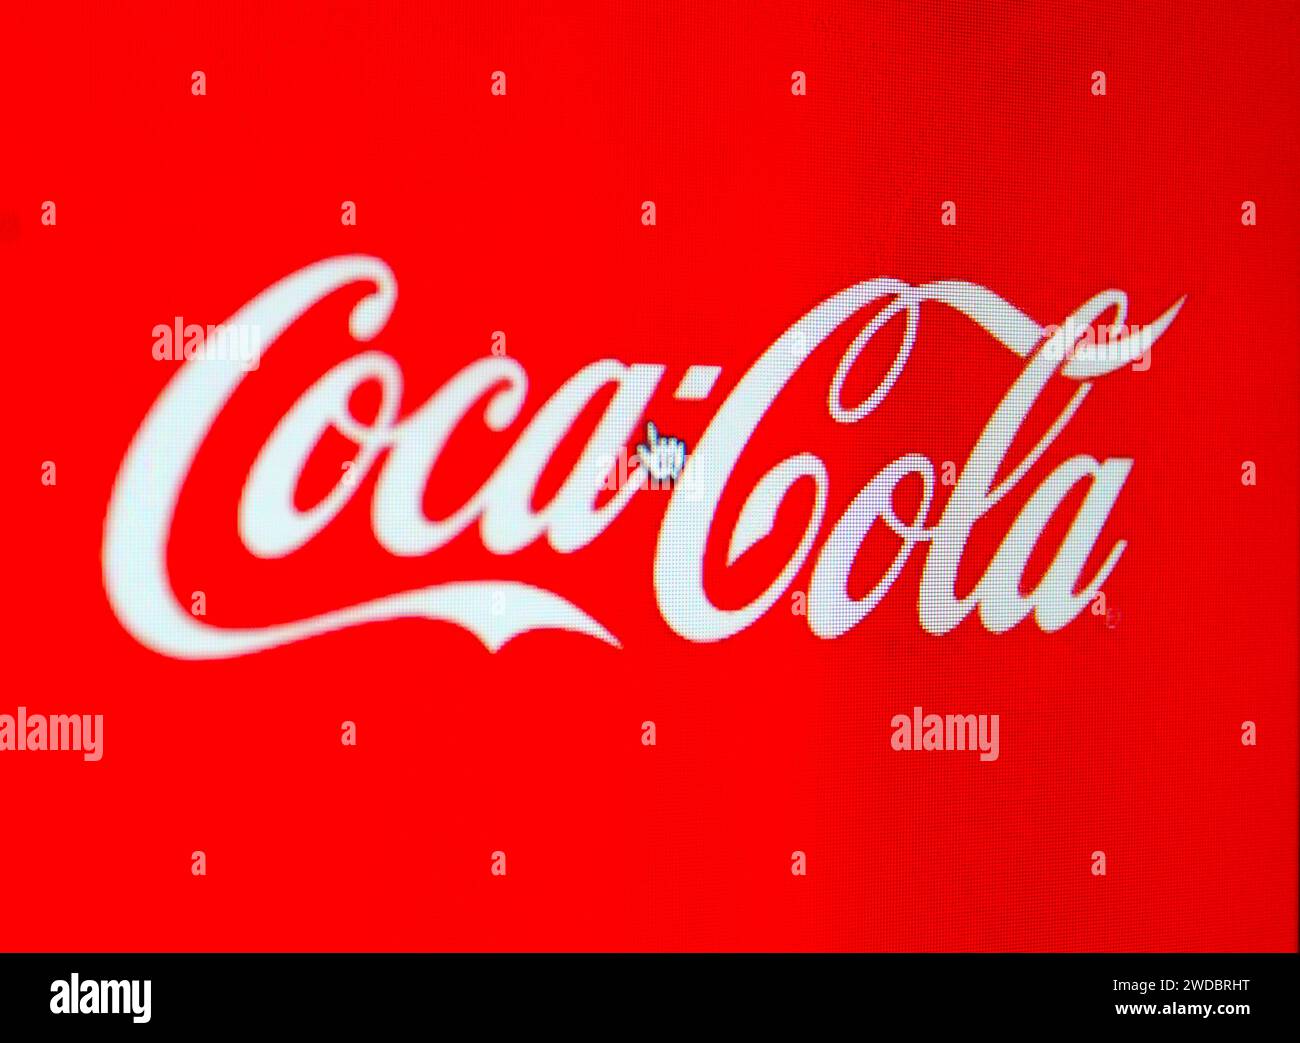 A photo of the Coca Cola logo on a computer screen. Stock Photo